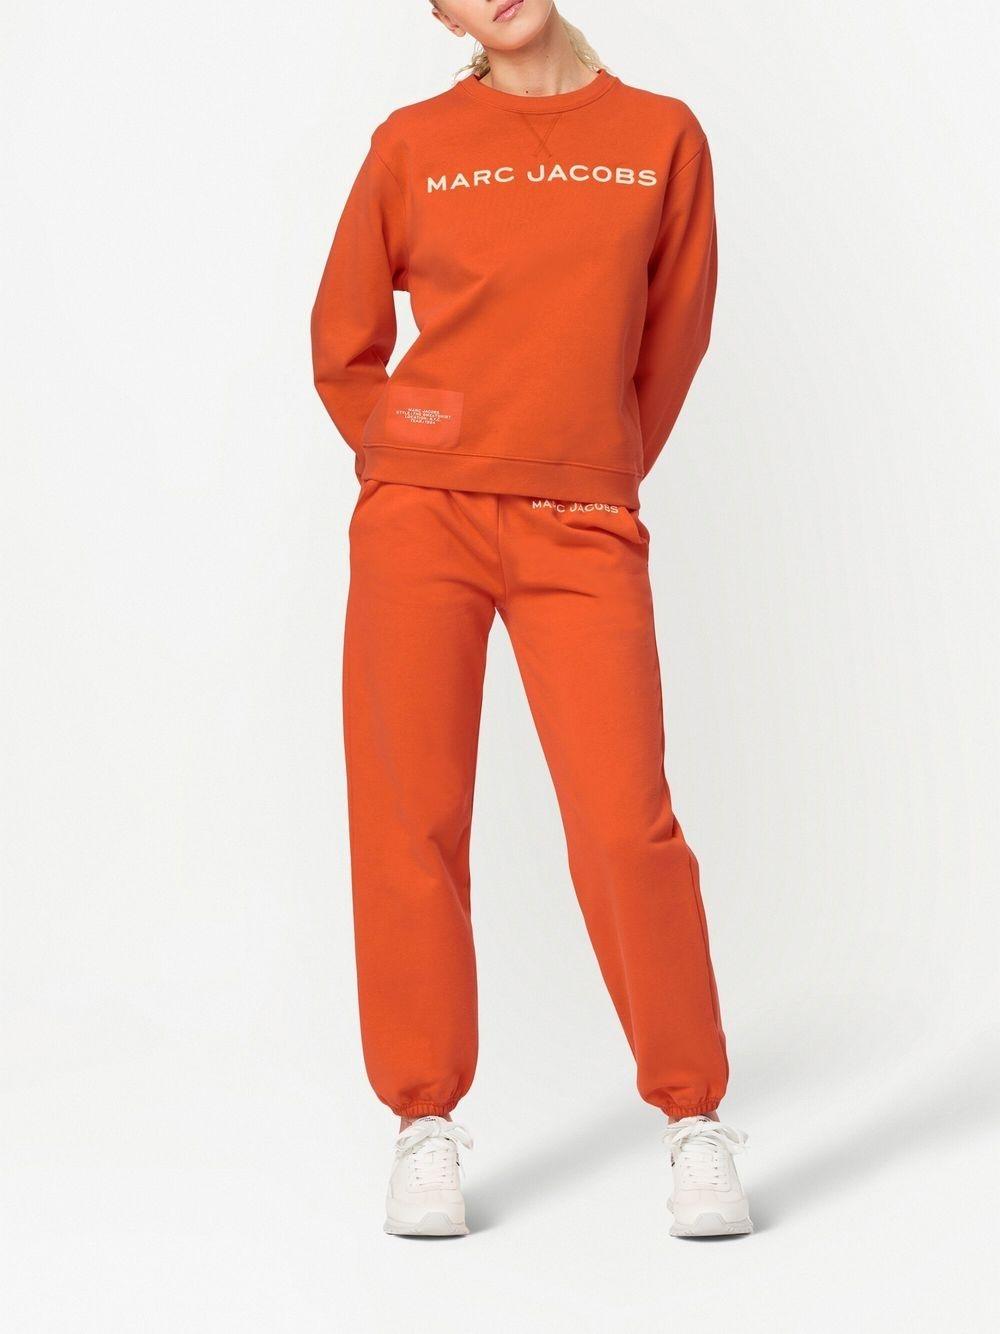 Sudadera Marc Jacobs naranja The Sweatshirt